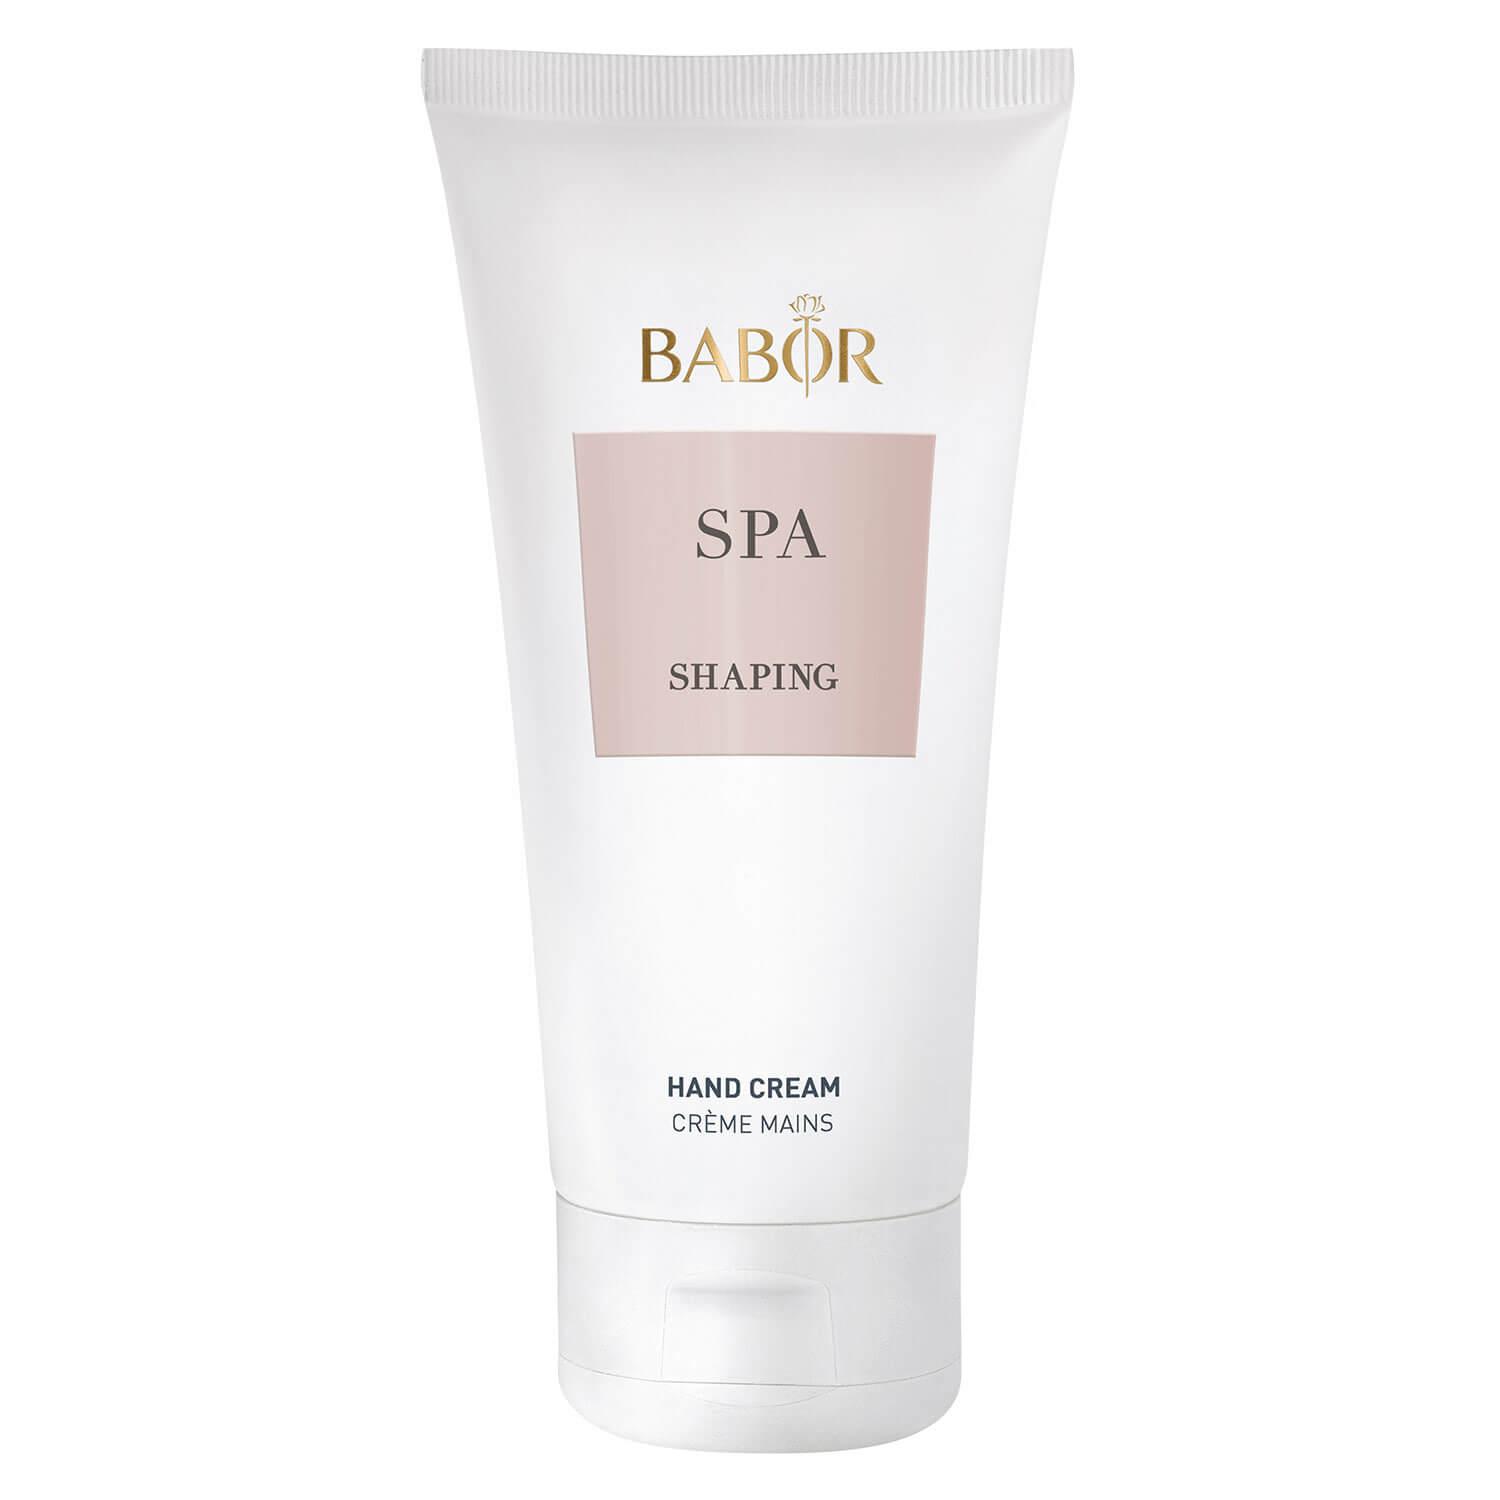 BABOR SPA - Shaping Hand Cream